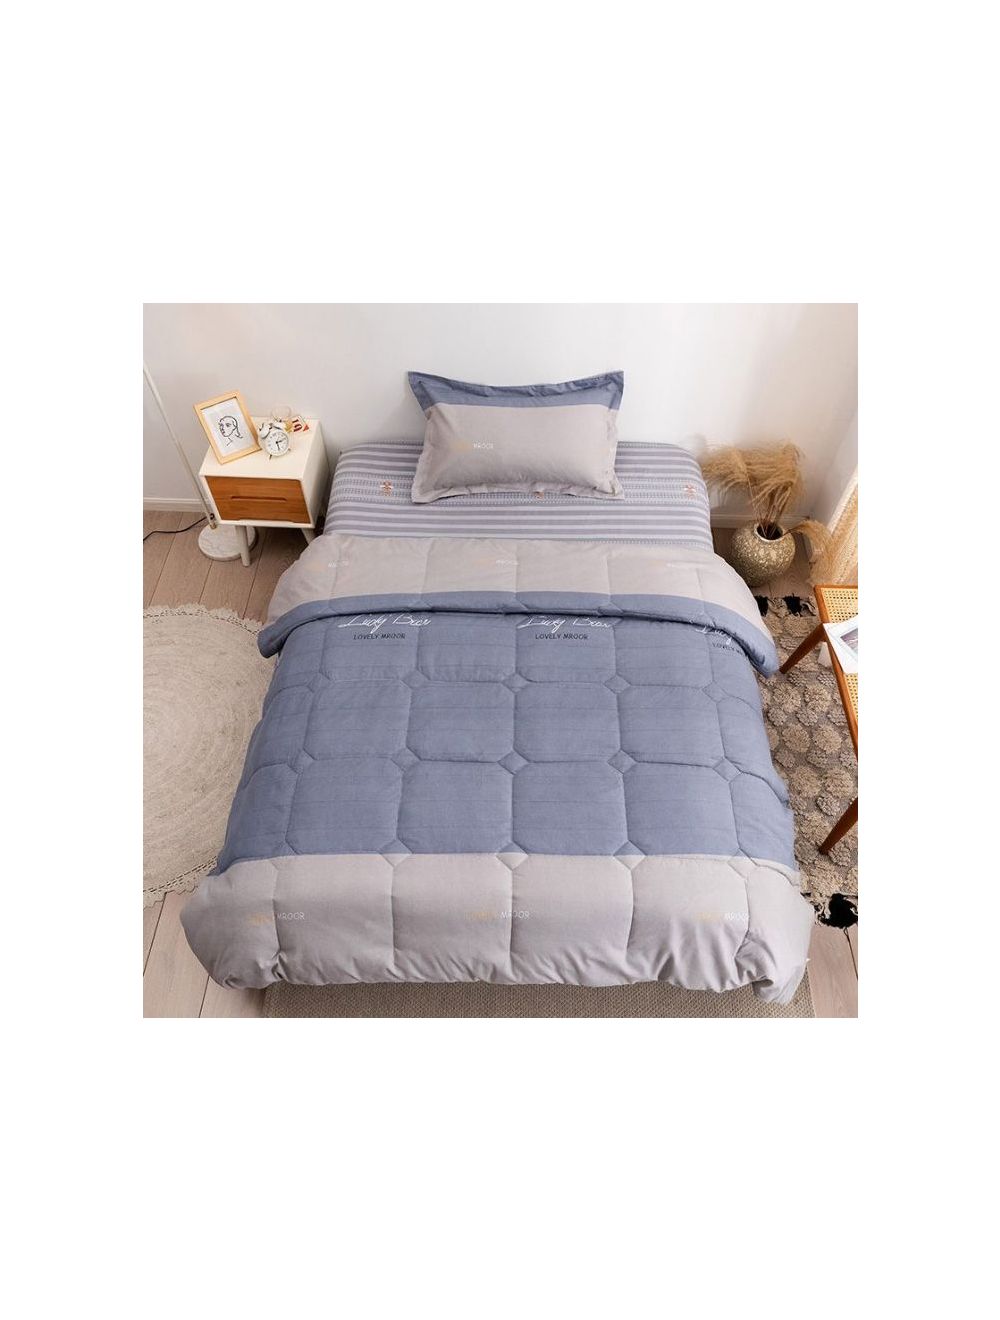 Rishahome 3 Piece Single Size Comforter Set Microfiber Multicolour 150x200cm-CASCS0003